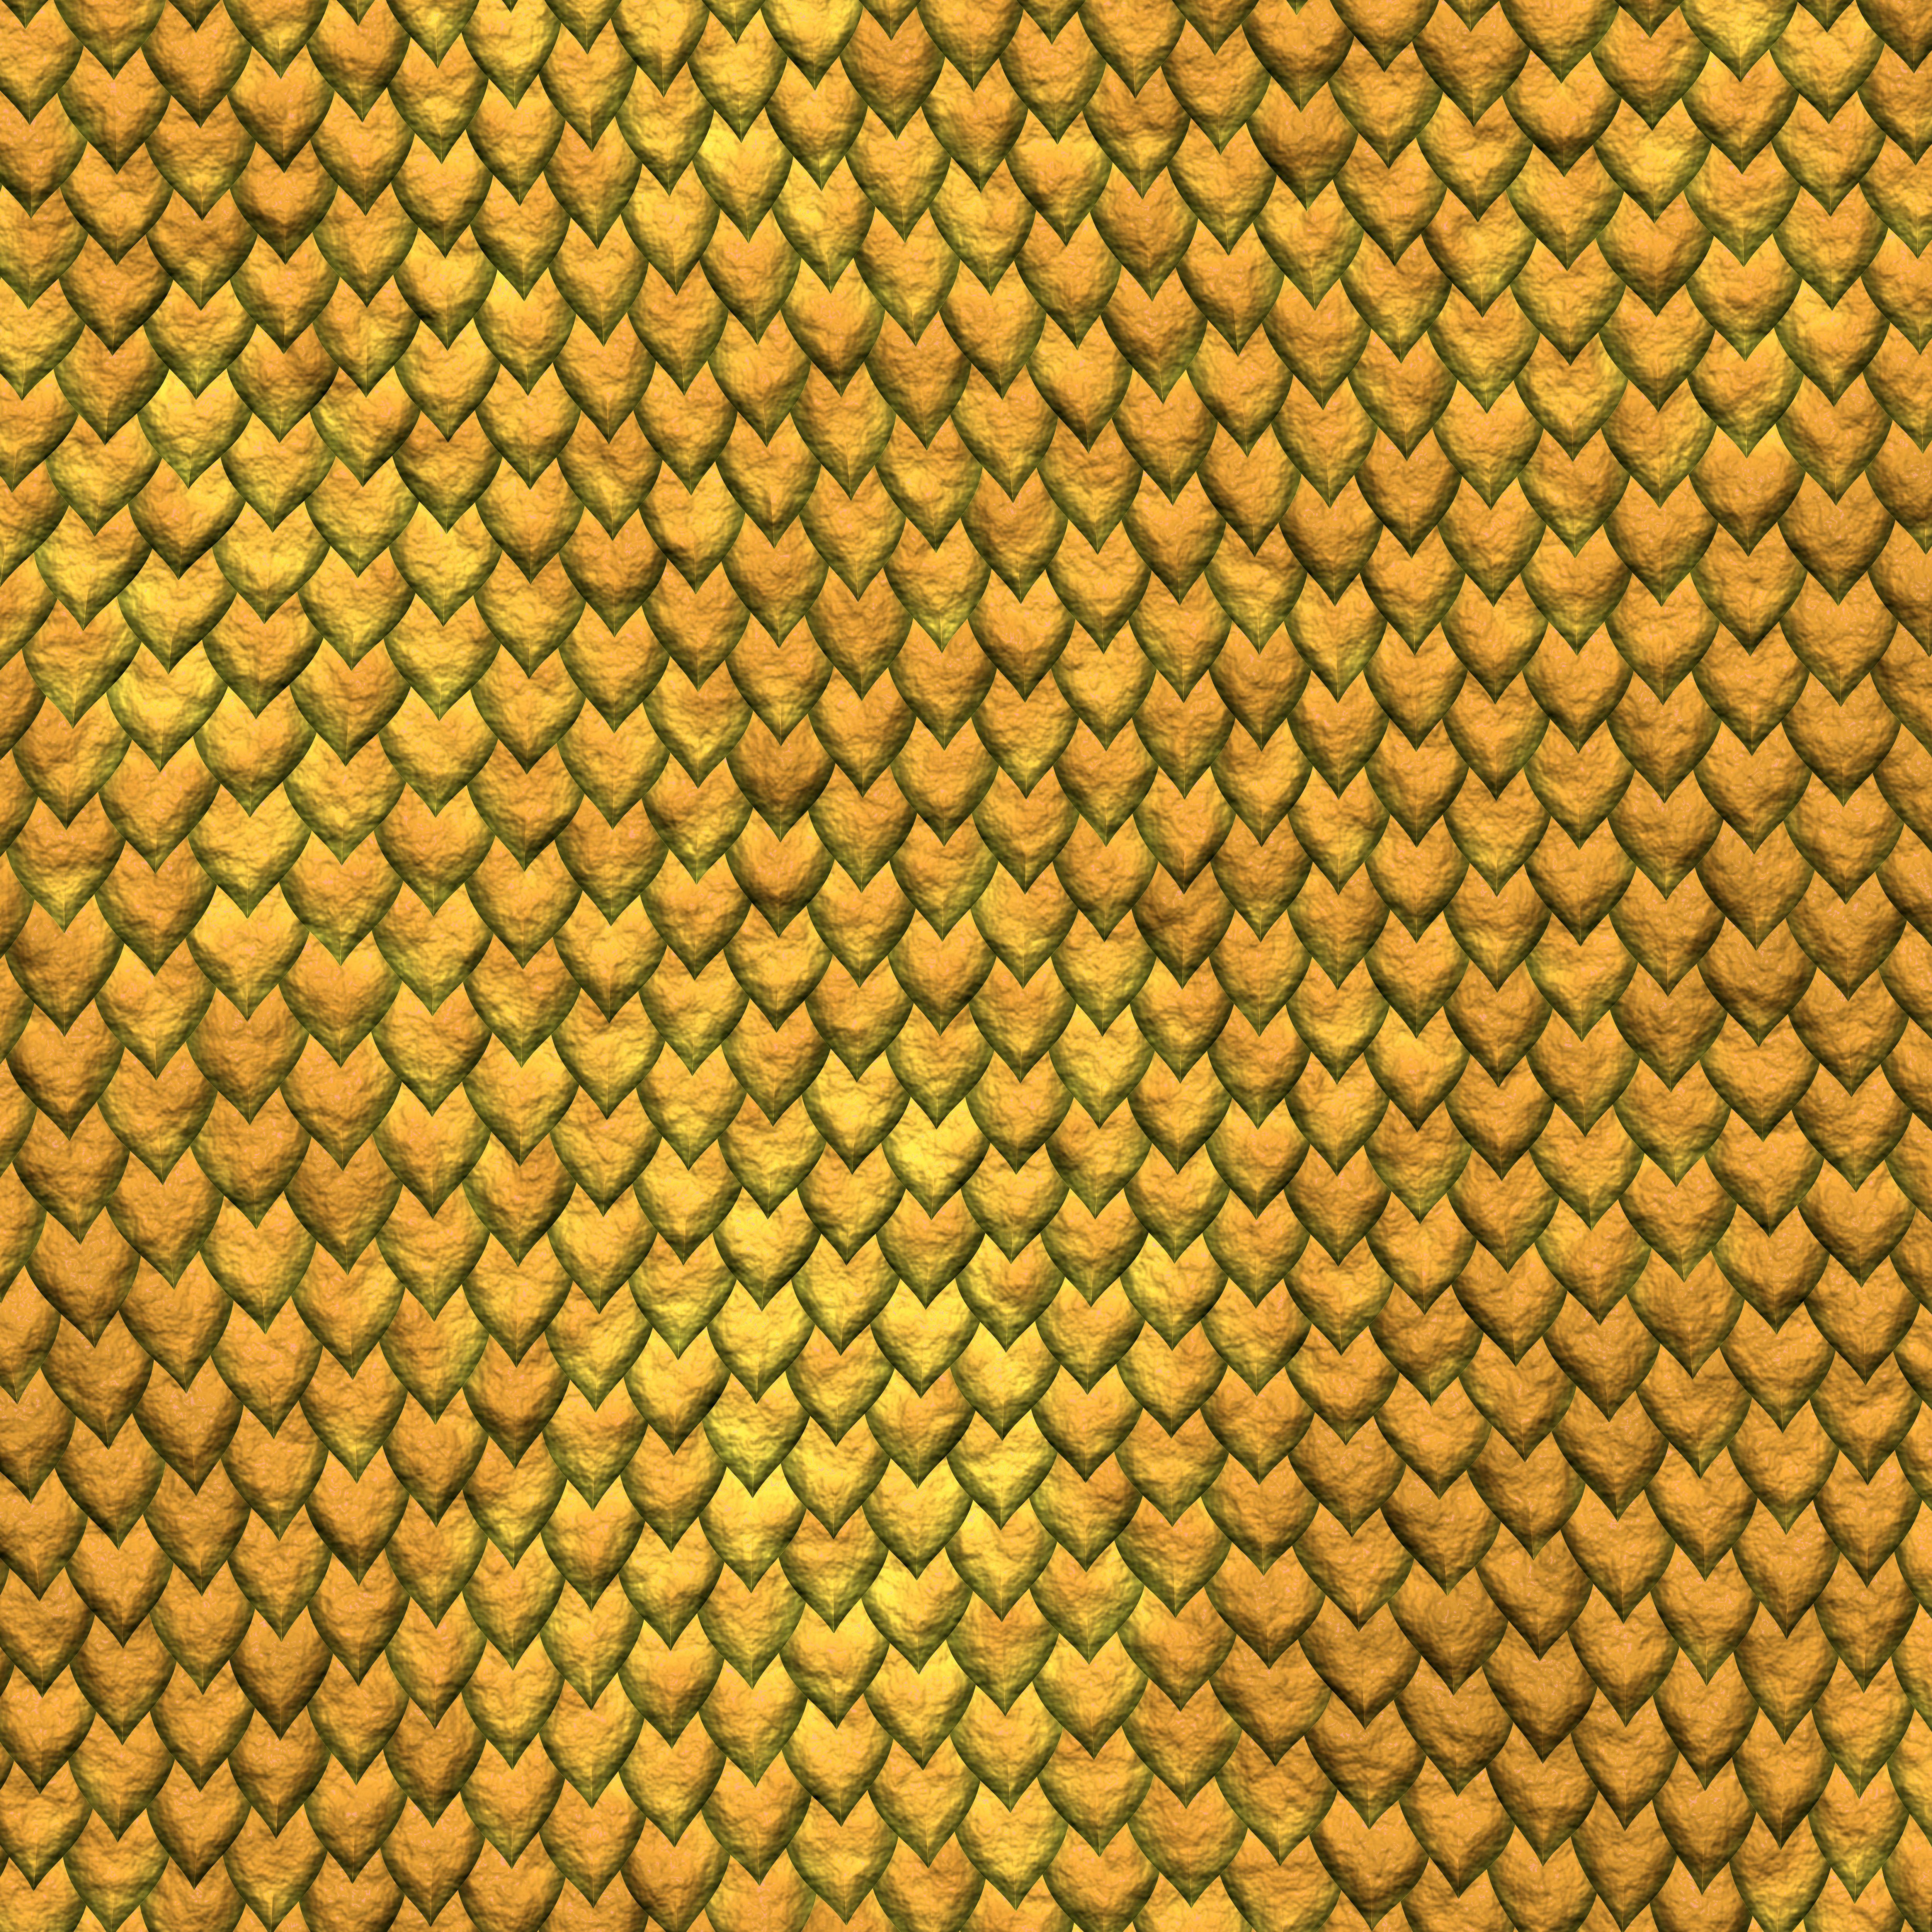 Pin By Mel Garner On -Wallpaper Pattern Texture In 2019. Dragon